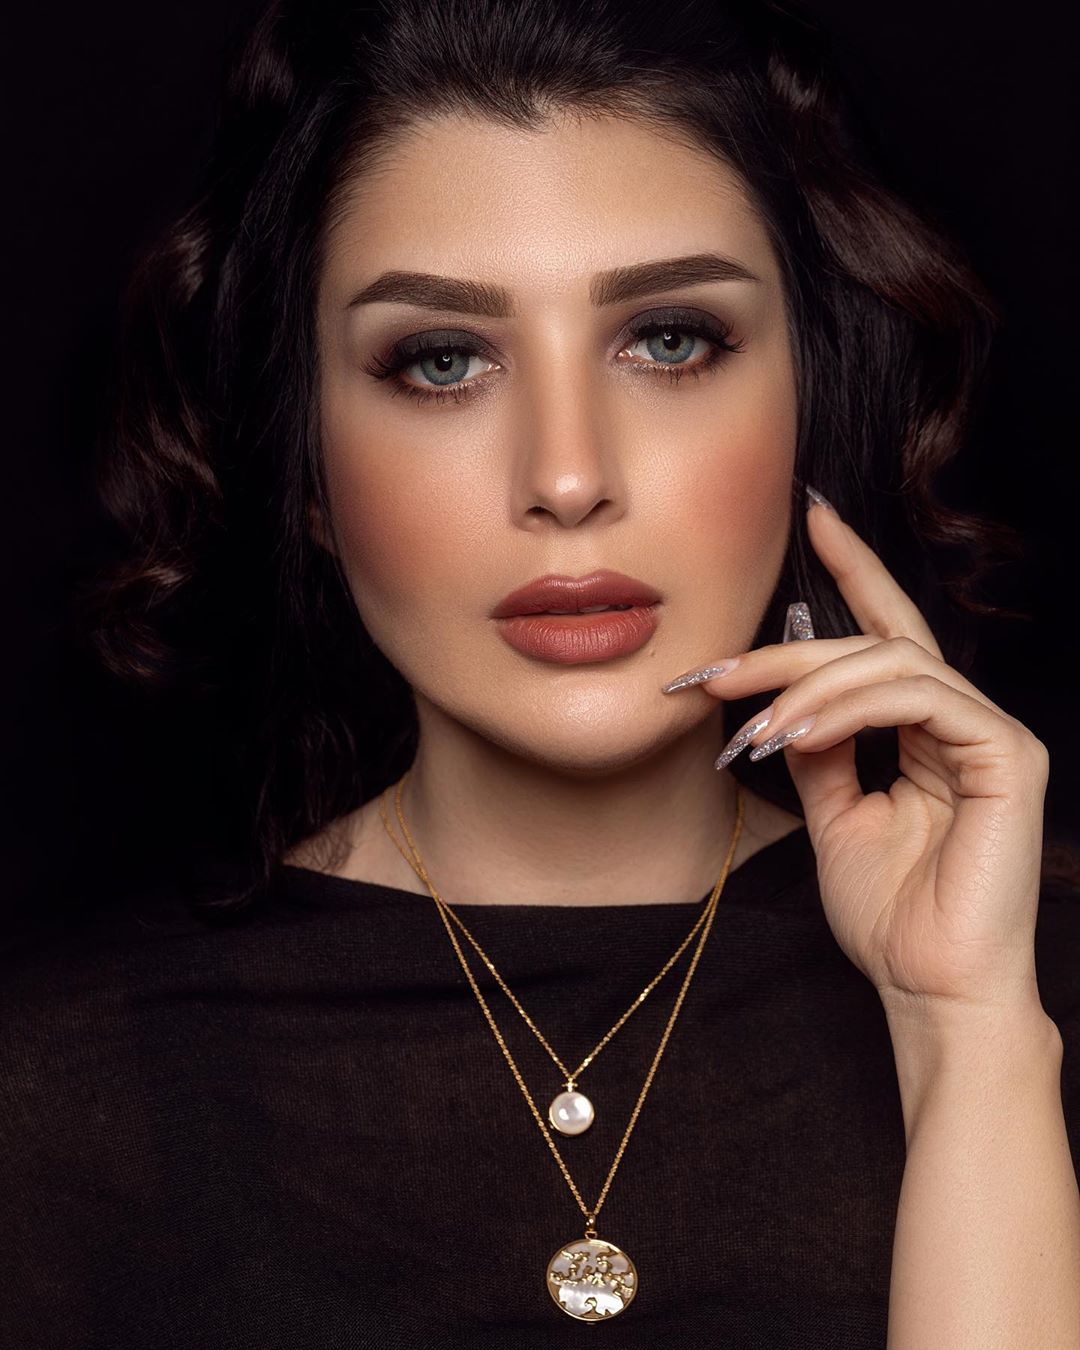 Arabic Lady Portrait with Black Background